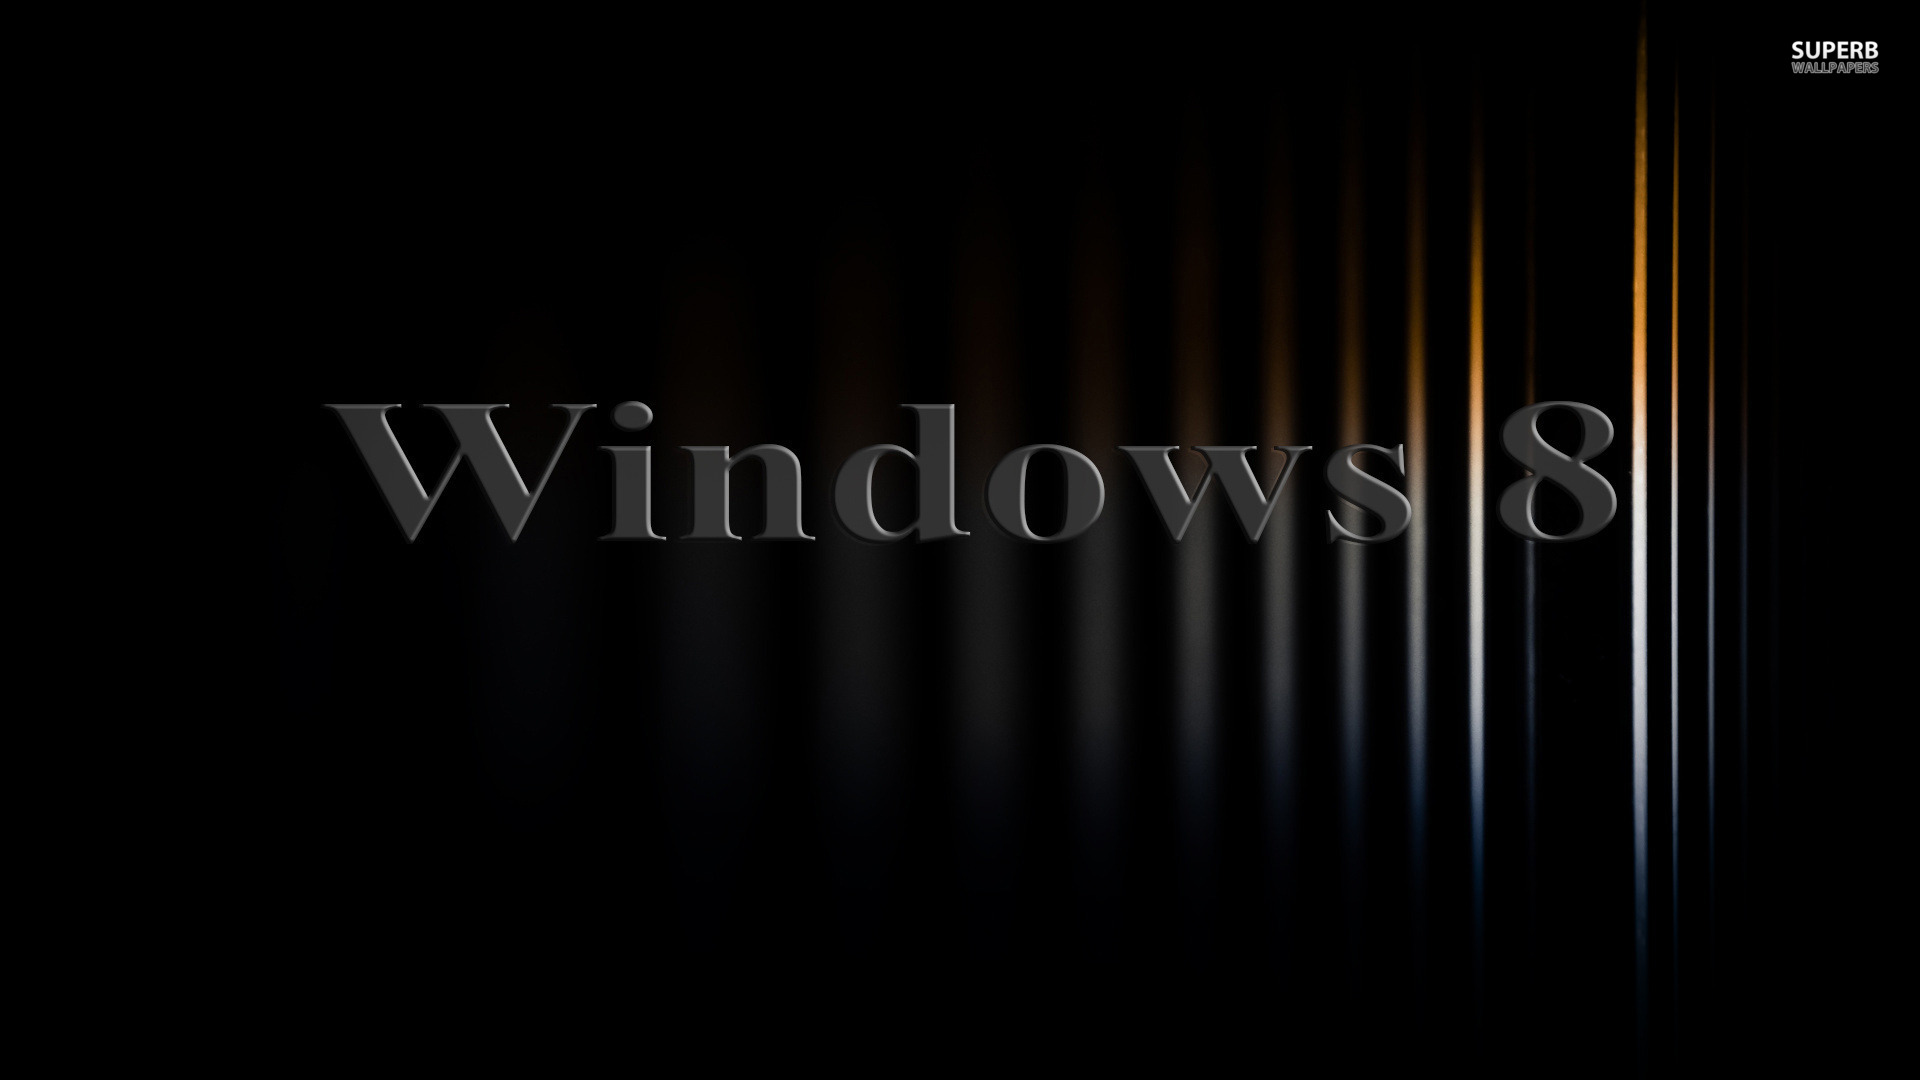 Wallpaper Windows 8 1 3d Image Num 98